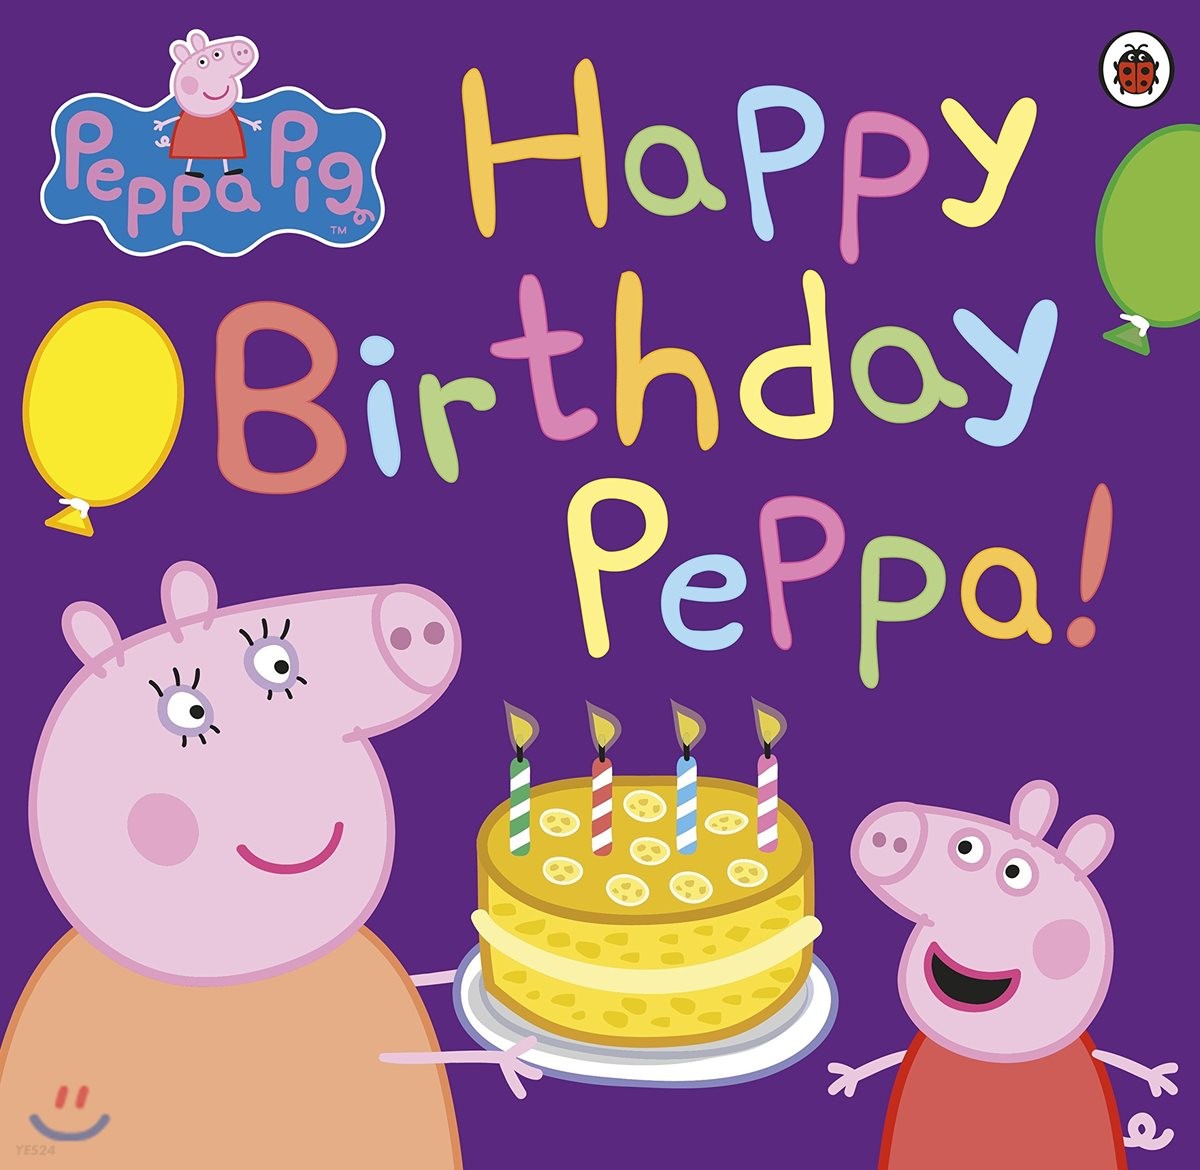 Peppa Pig  : Happy birthday Peppa!